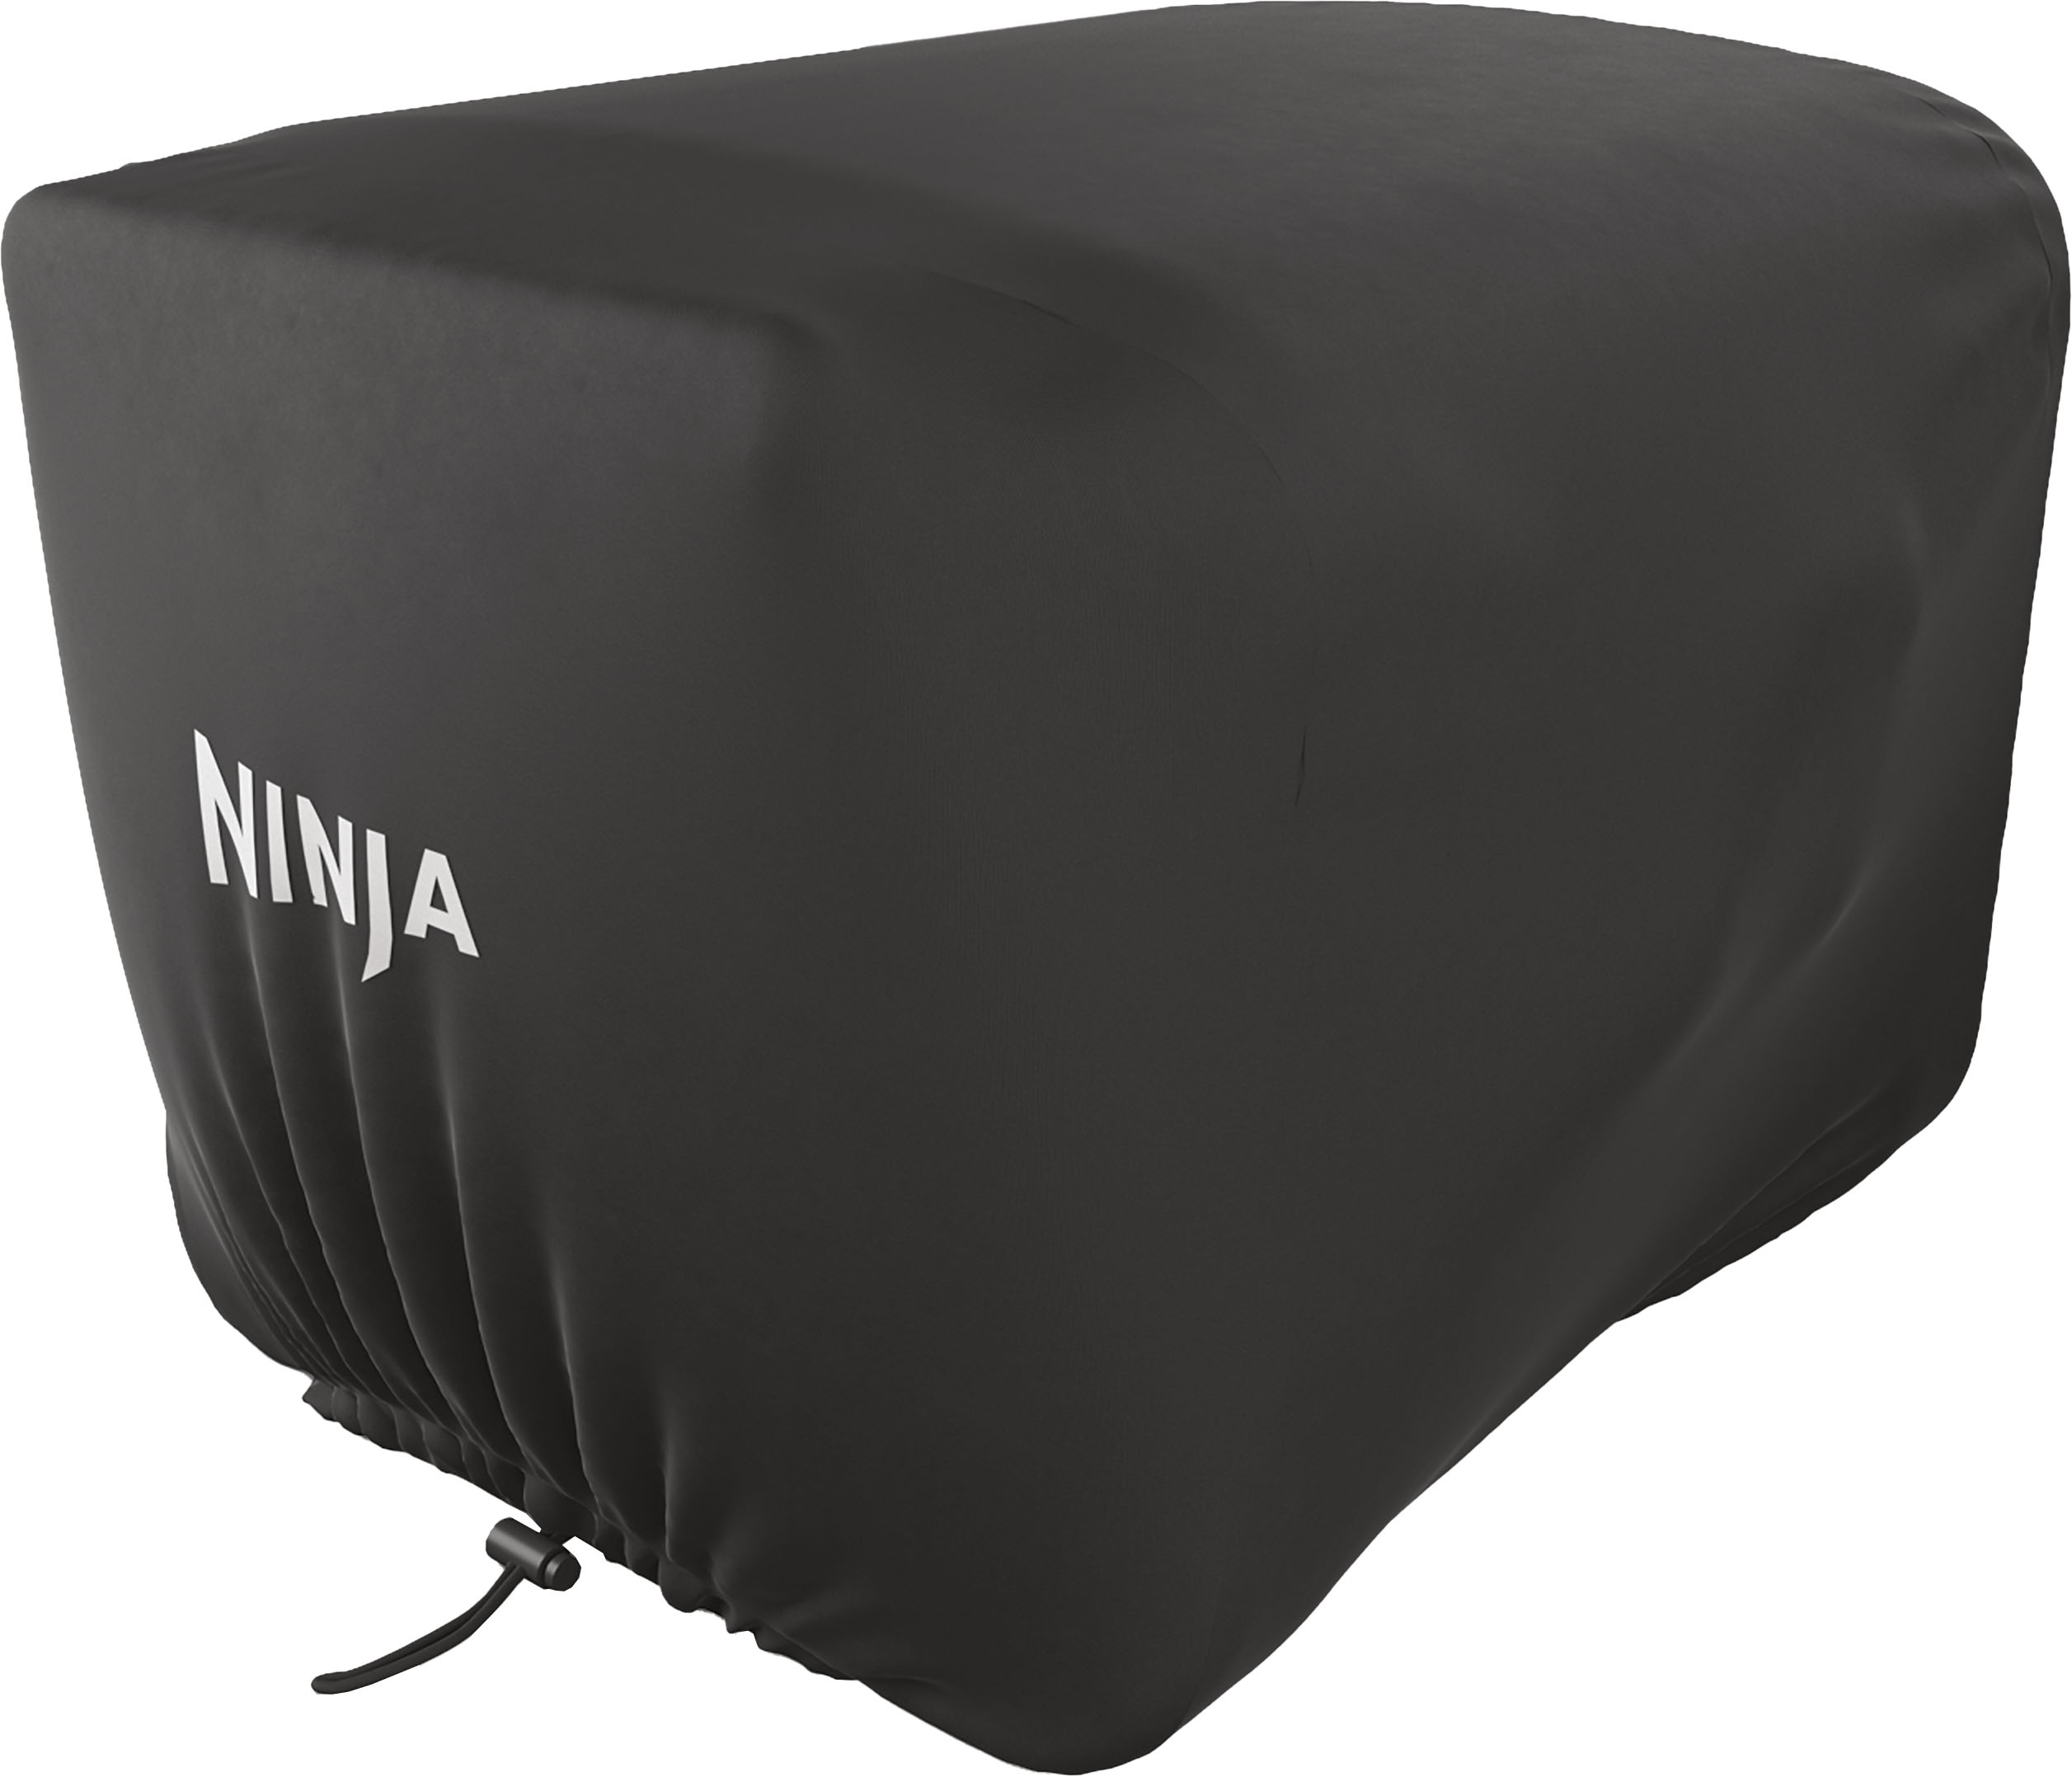  Amerbro Cover for Ninja Woodfire Outdoor Oven - Waterproof Ninja  Pizza Oven Cover Compatible with Ninja Oven OO101(OO100 series) - Heavy  Duty 600D Oxford Fabric : Patio, Lawn & Garden